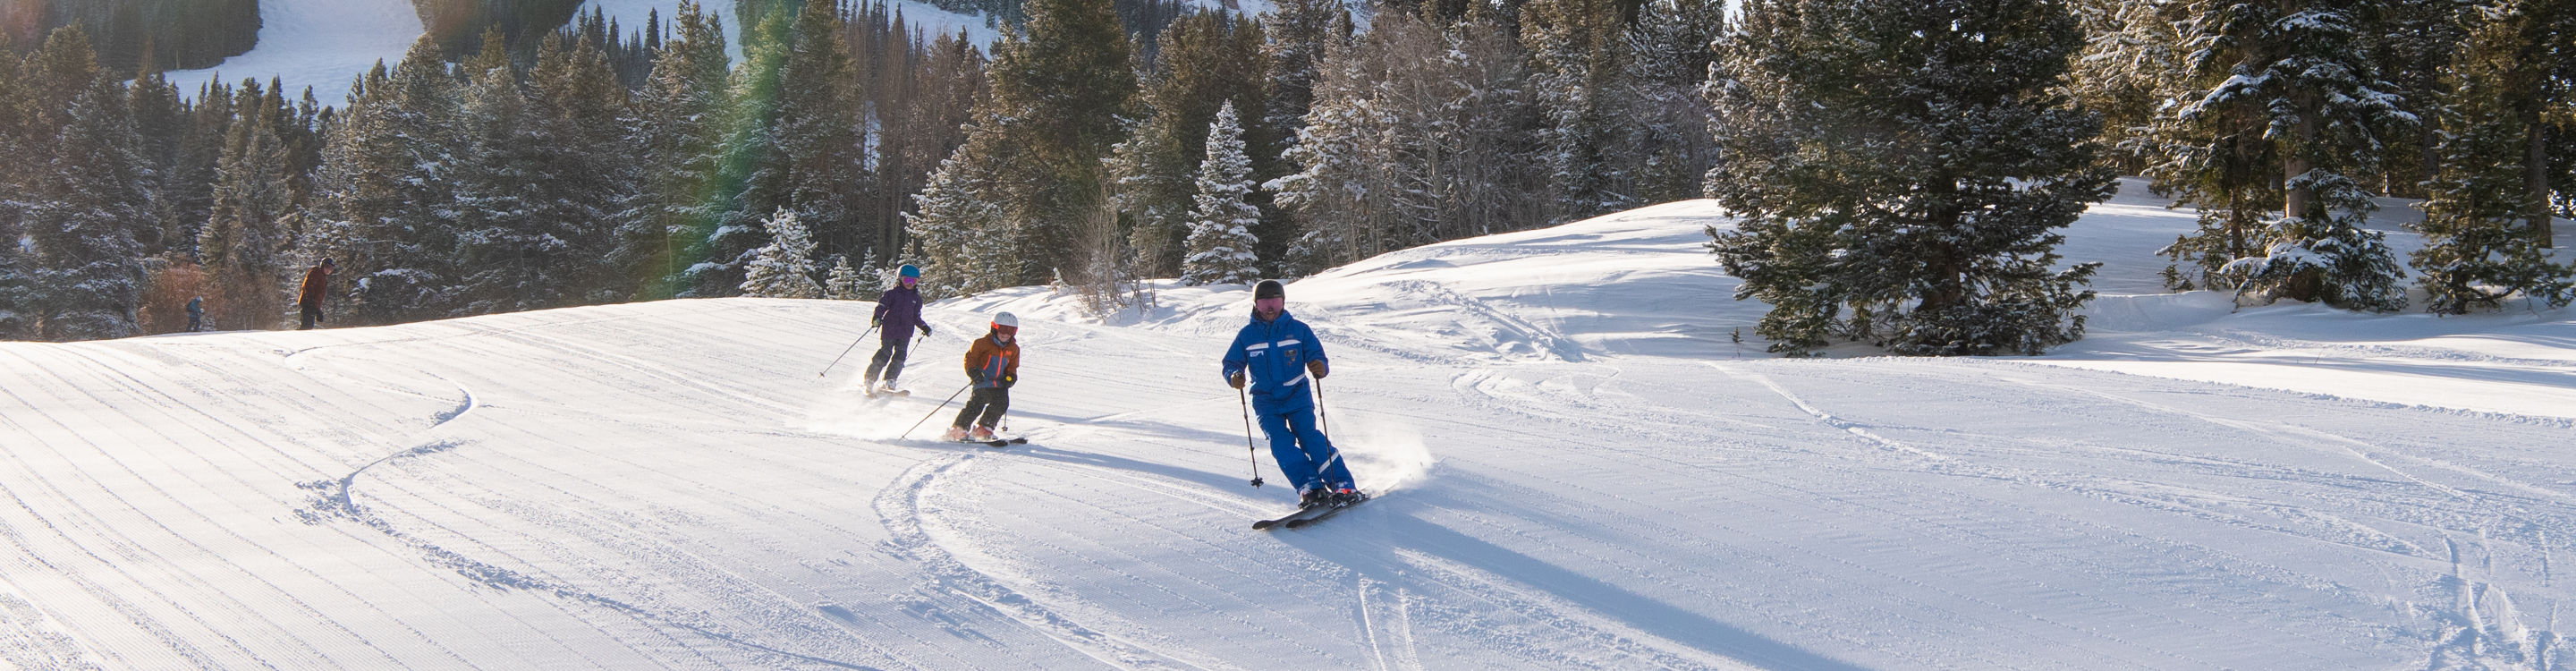 Colorado Ski and Snowboard School Crested Butte Mountain Resort